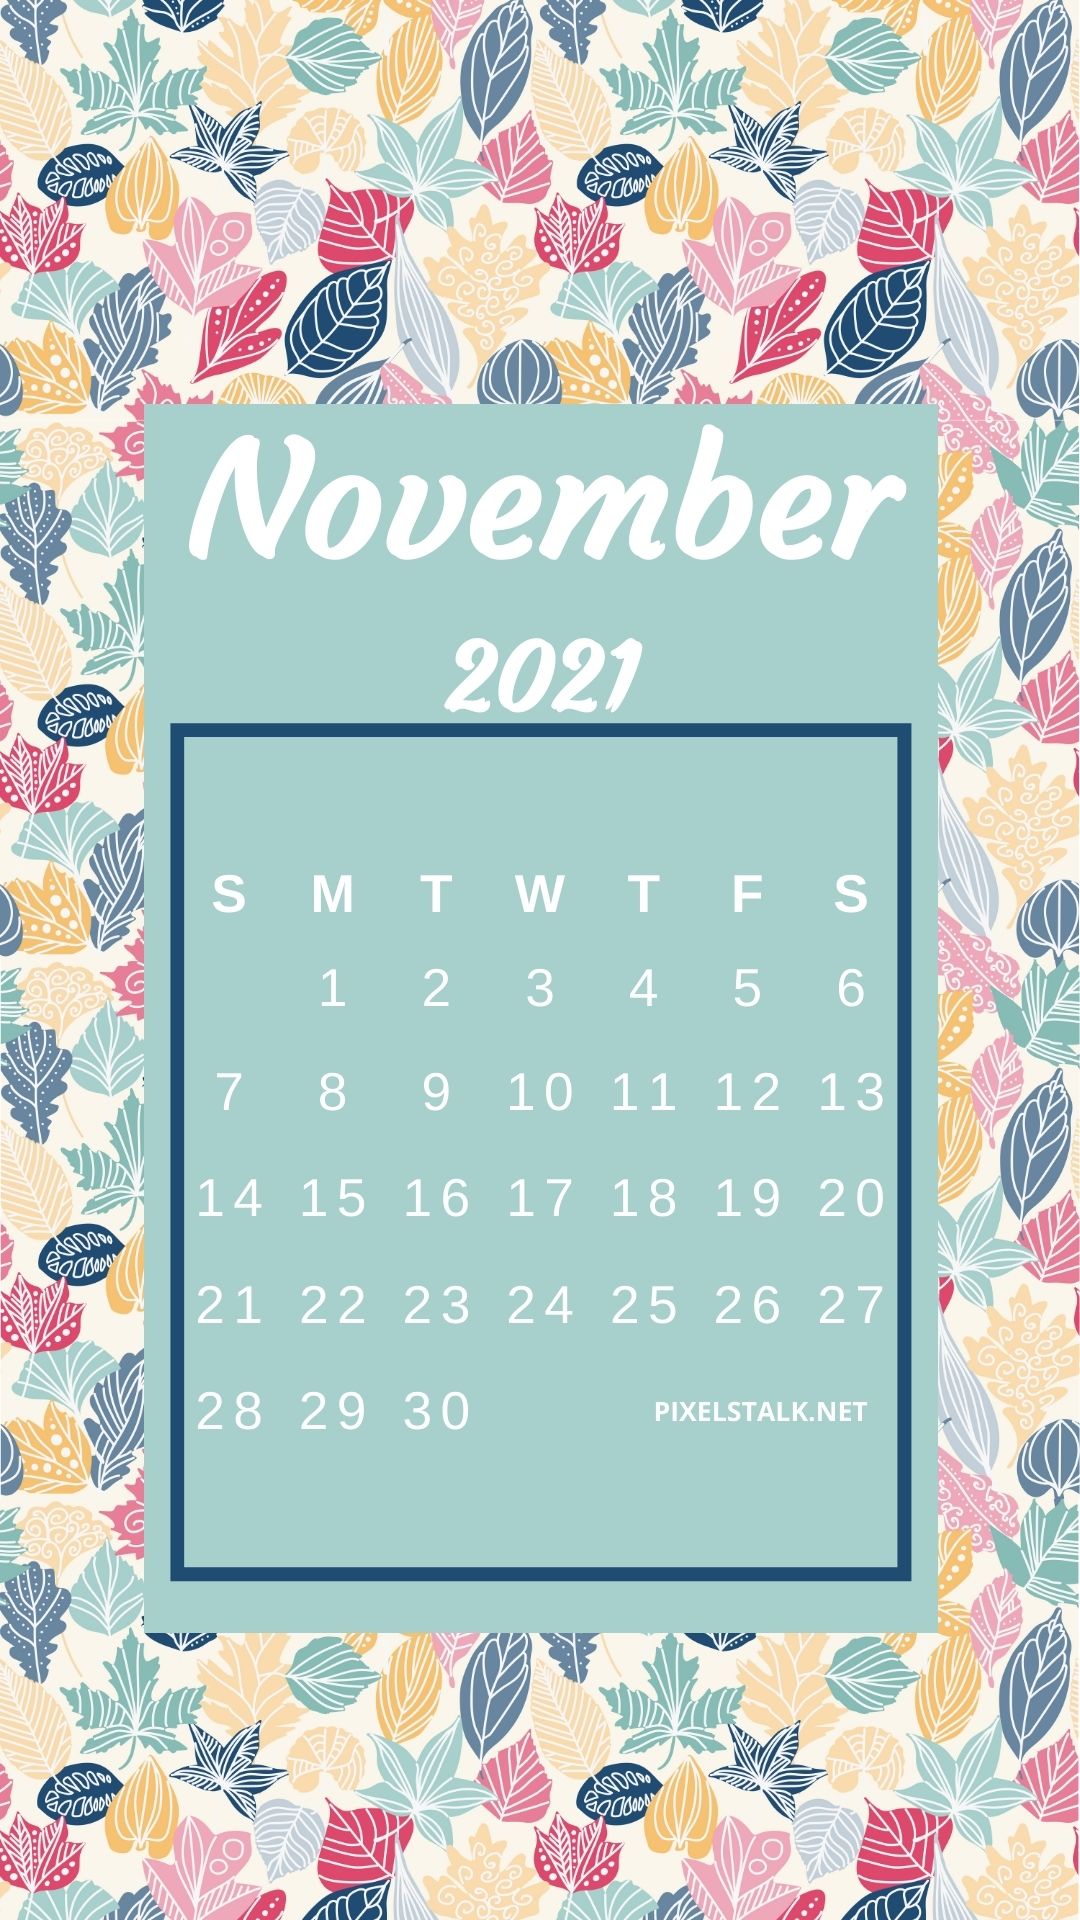 November 2017 Wallpapers